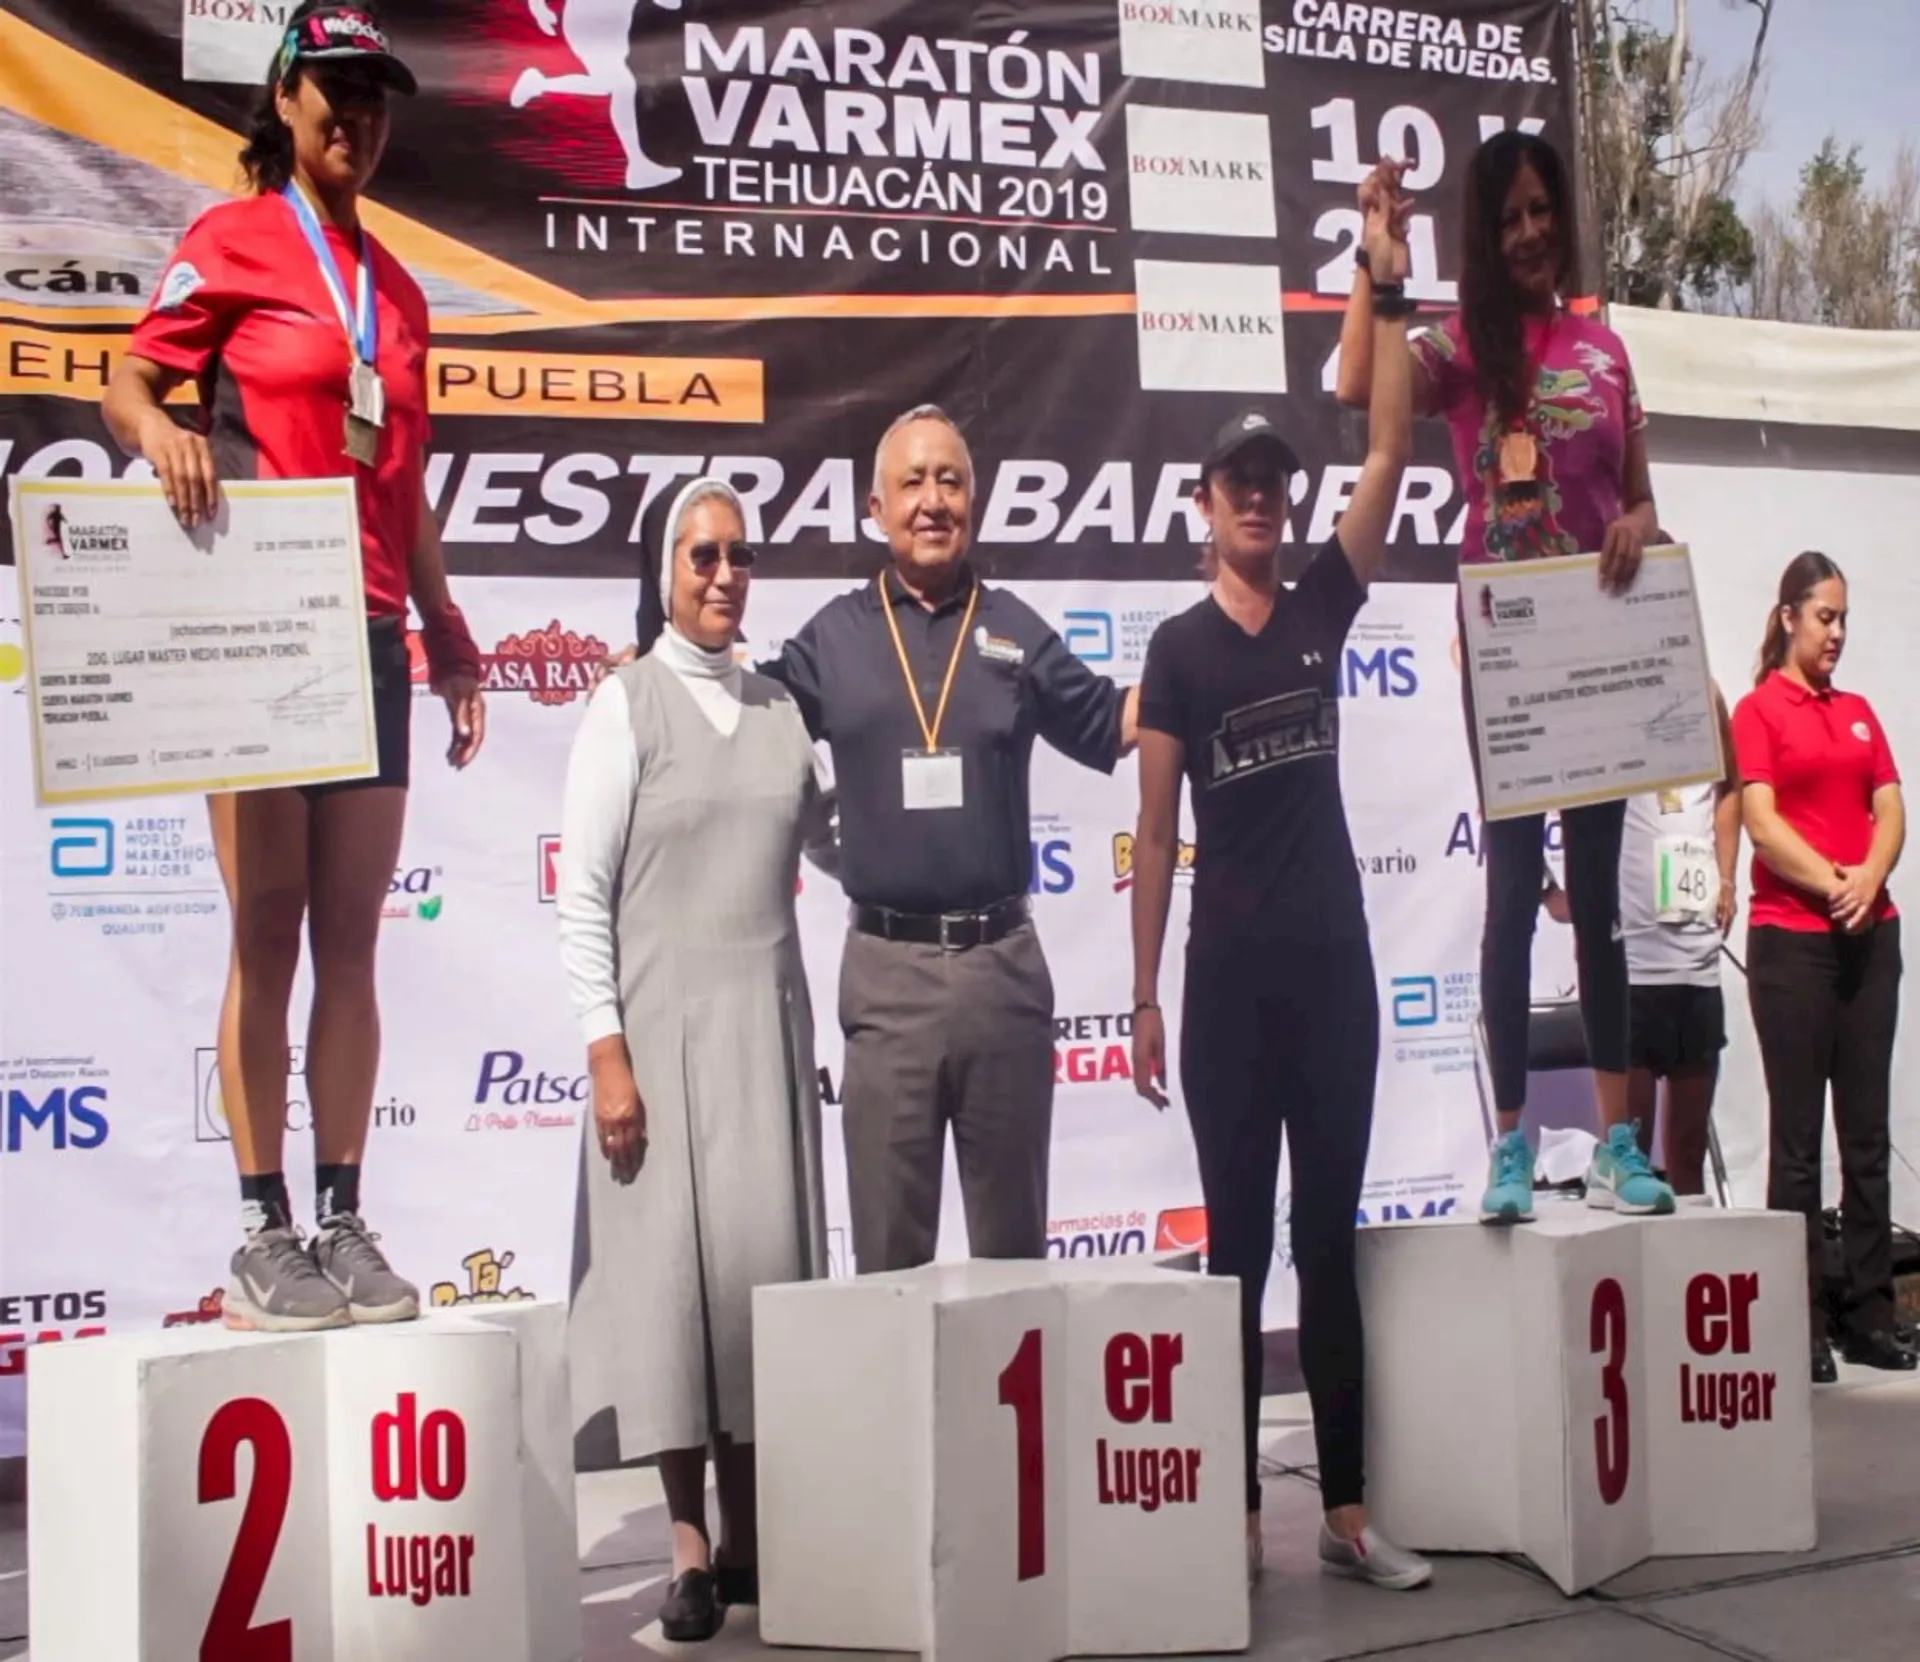 Maraton Varmex Tehuacan